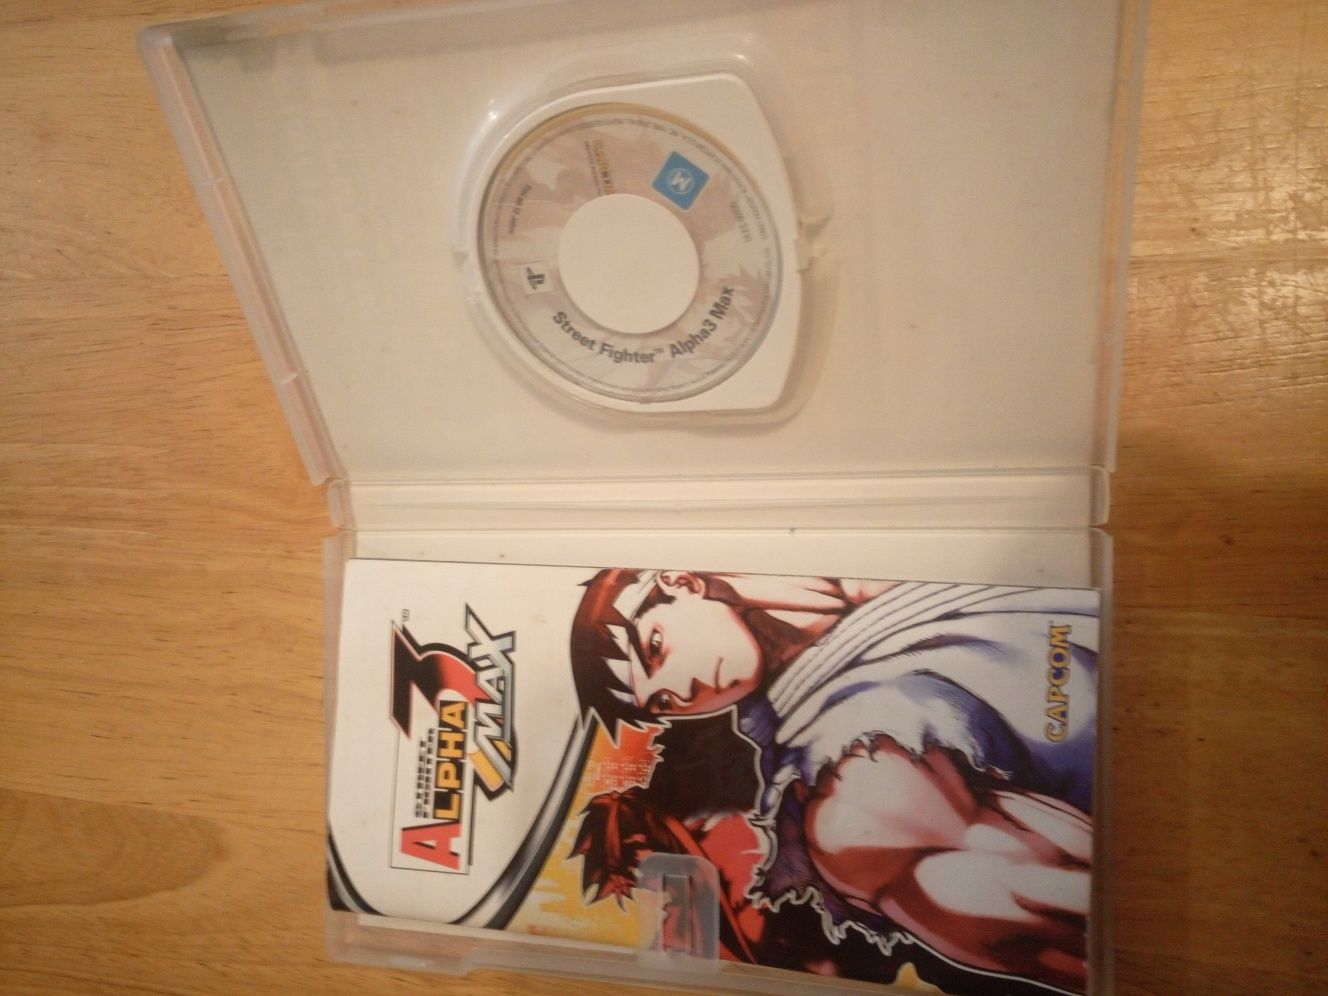 PSP - Street Fighter Alpha 3 Max e Final Fantasy 7